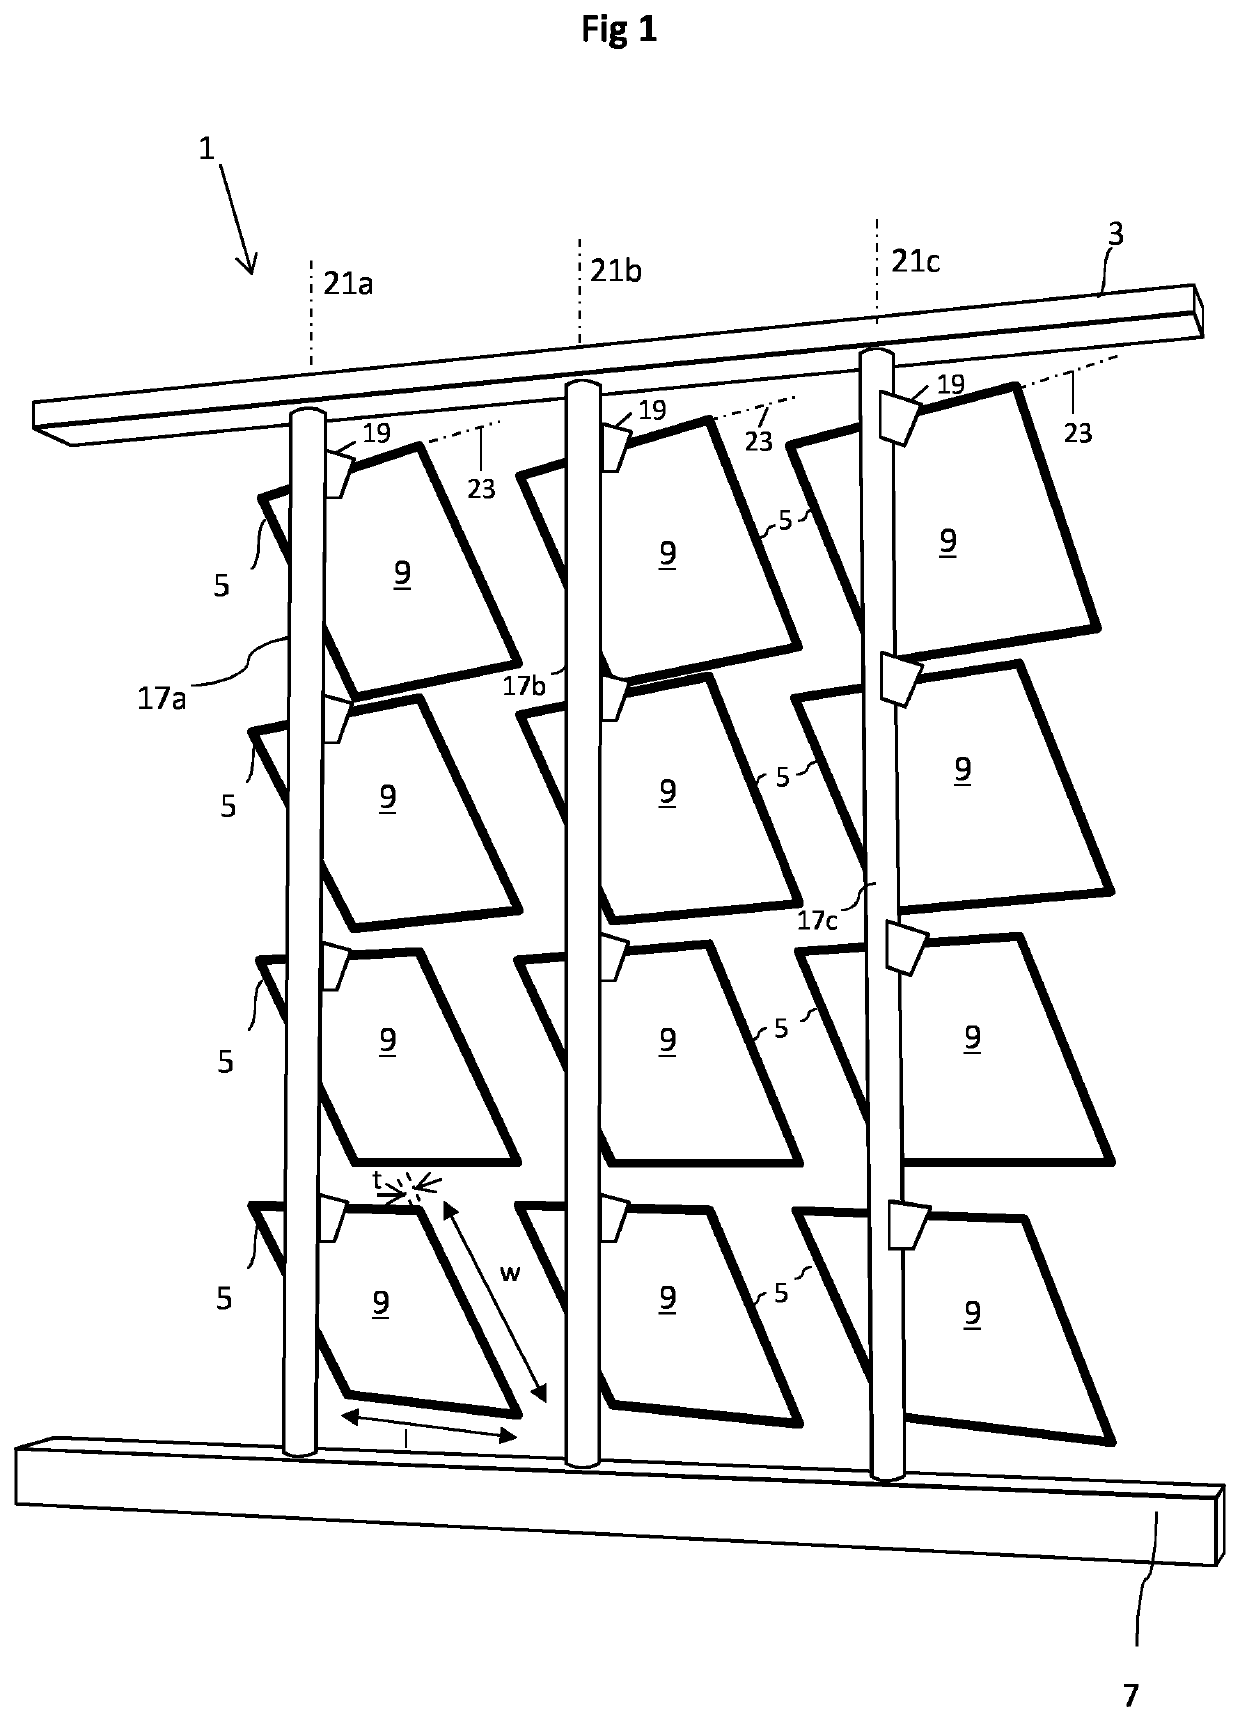 Solar shading module, glazed structure, building, and method of operating a solar shading module